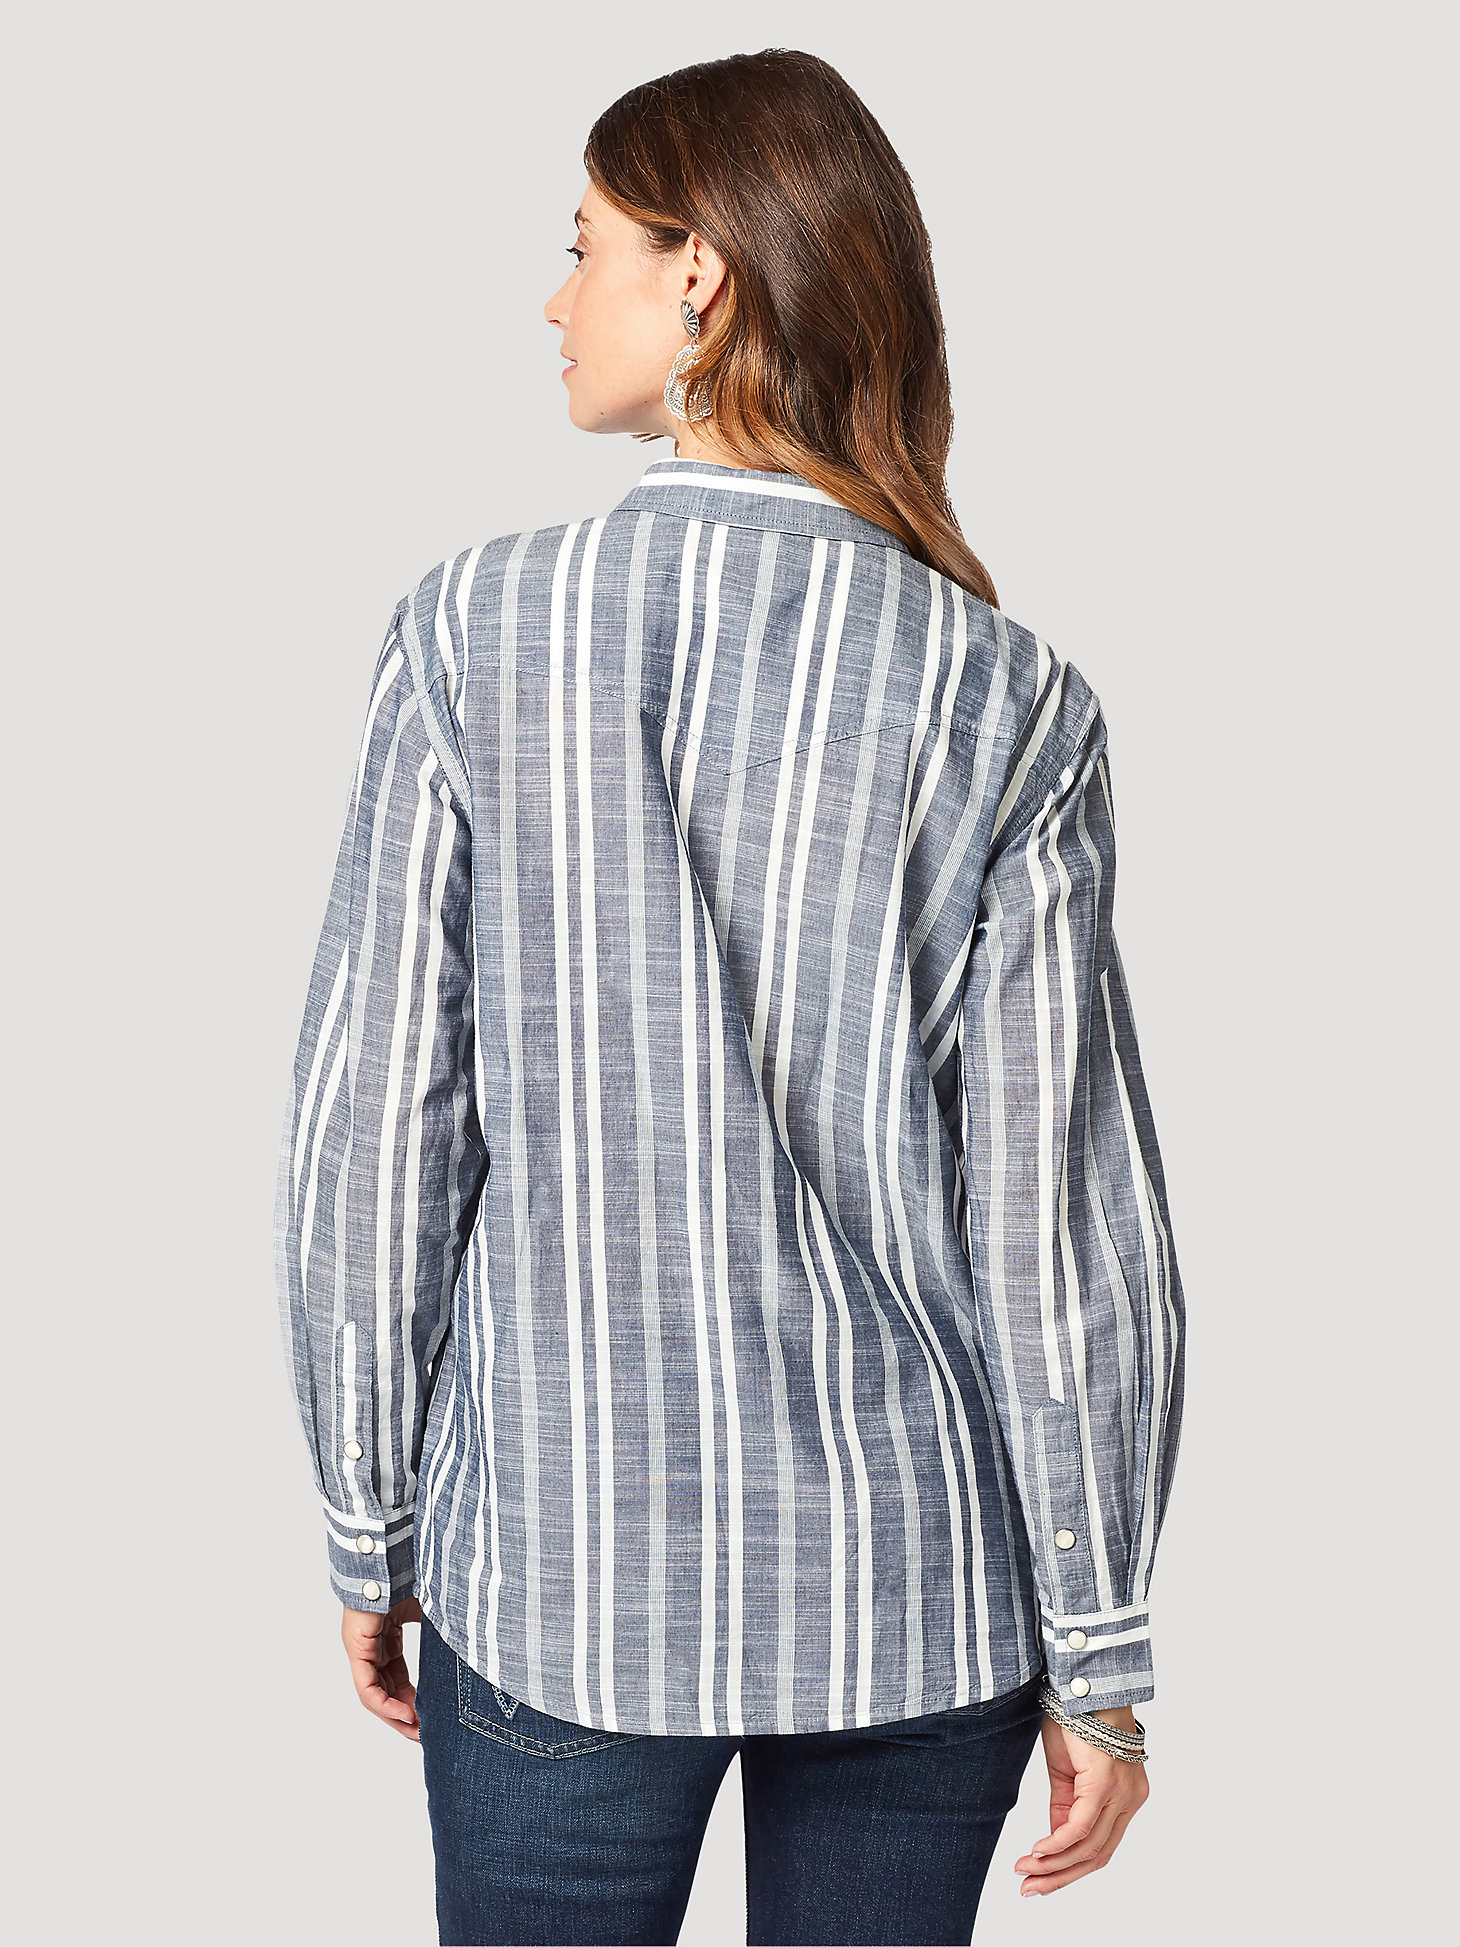 Women's Wrangler Retro® Long Sleeve Boyfriend Fit Snap Shirt in Indigo alternative view 2